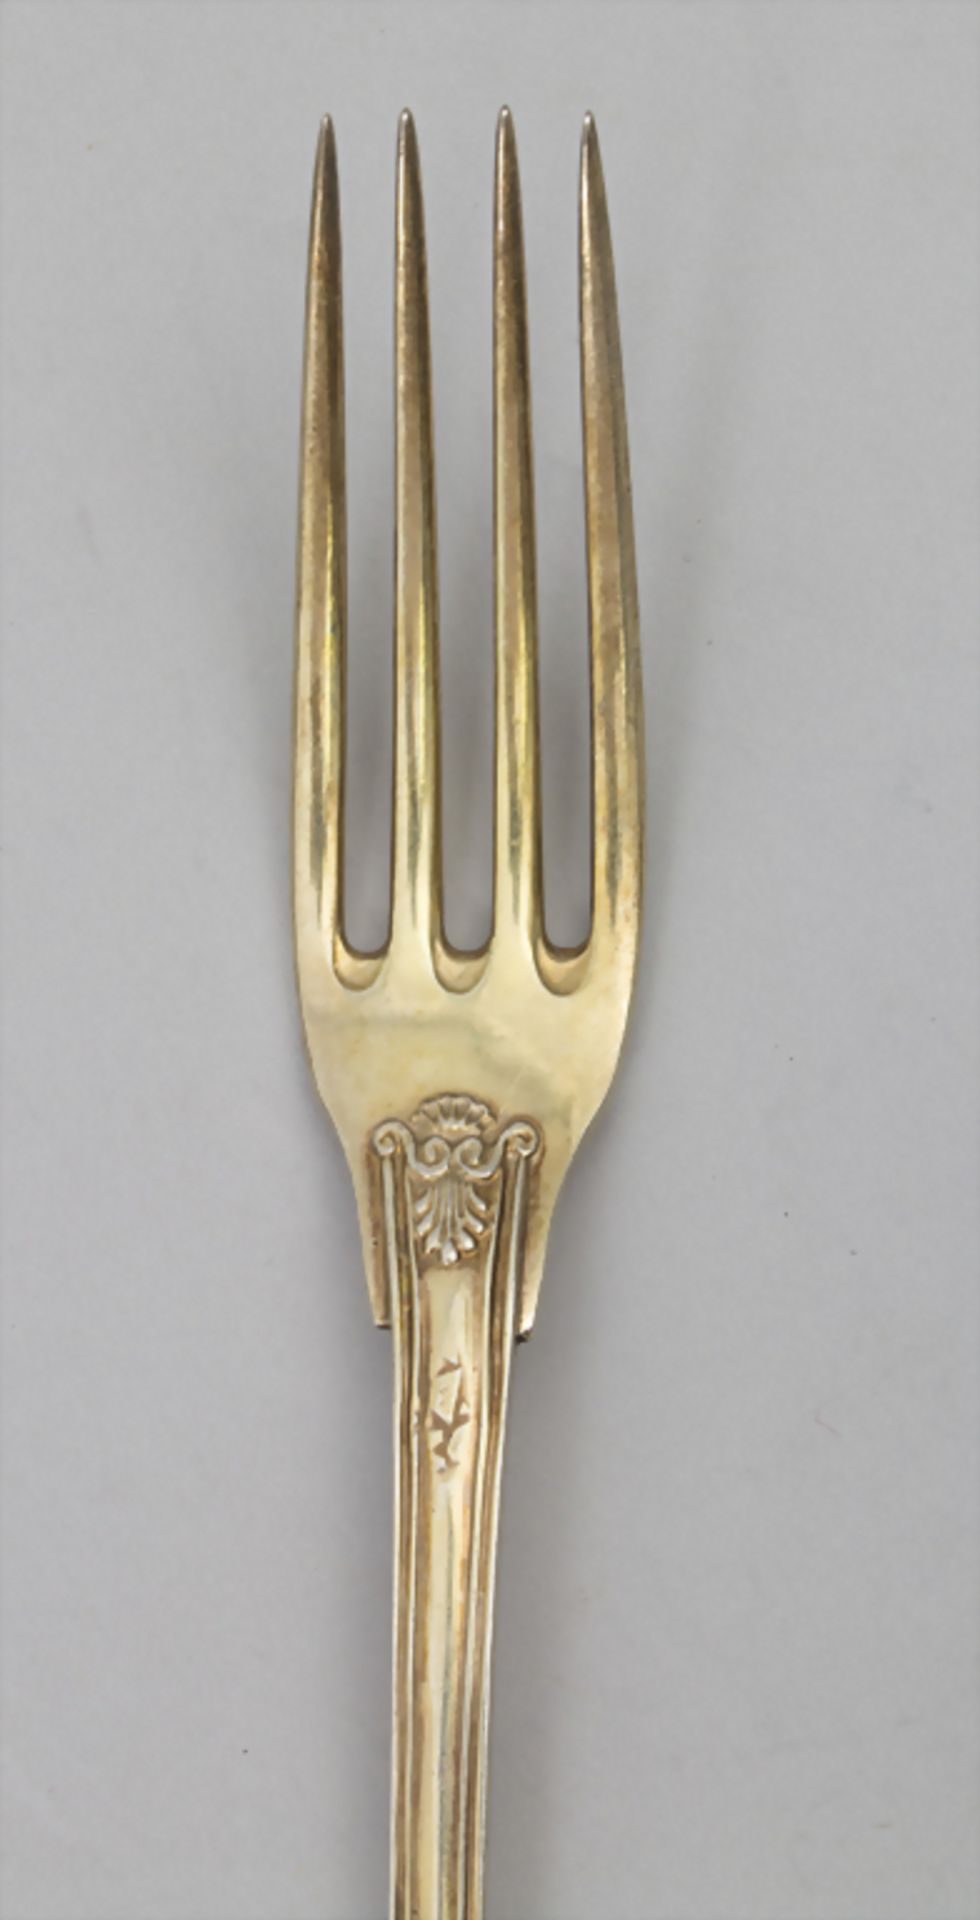 36 tlg. Silberbesteck / A 36-piece set of silver cutlery, Charles Salomon Mahler, Paris, 1824-18 - Bild 13 aus 15